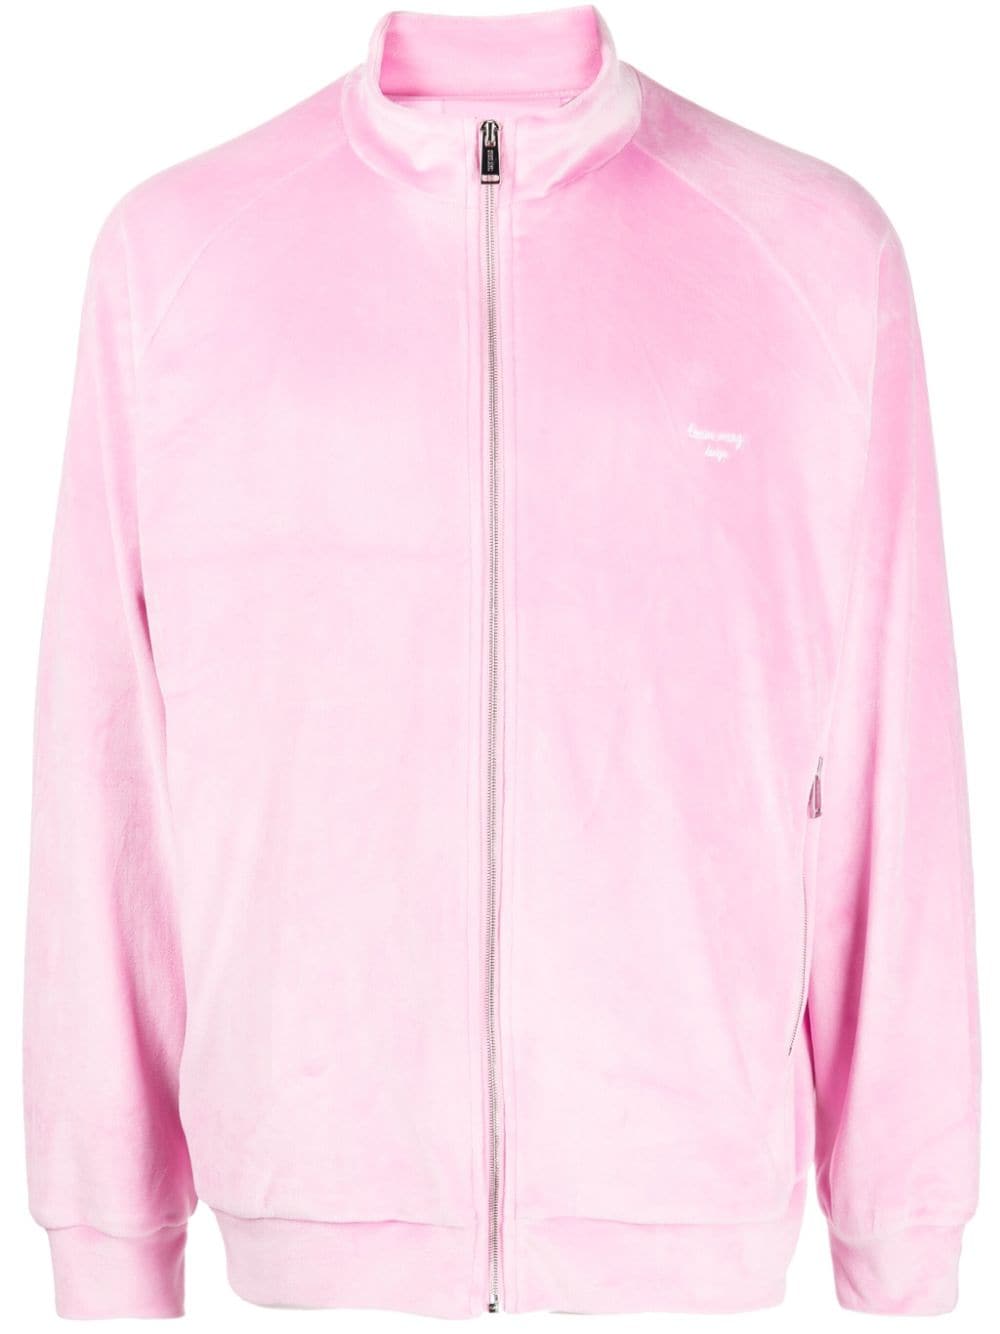 Team Wang Design Brushed-effect Zip-up Jacket In Pink